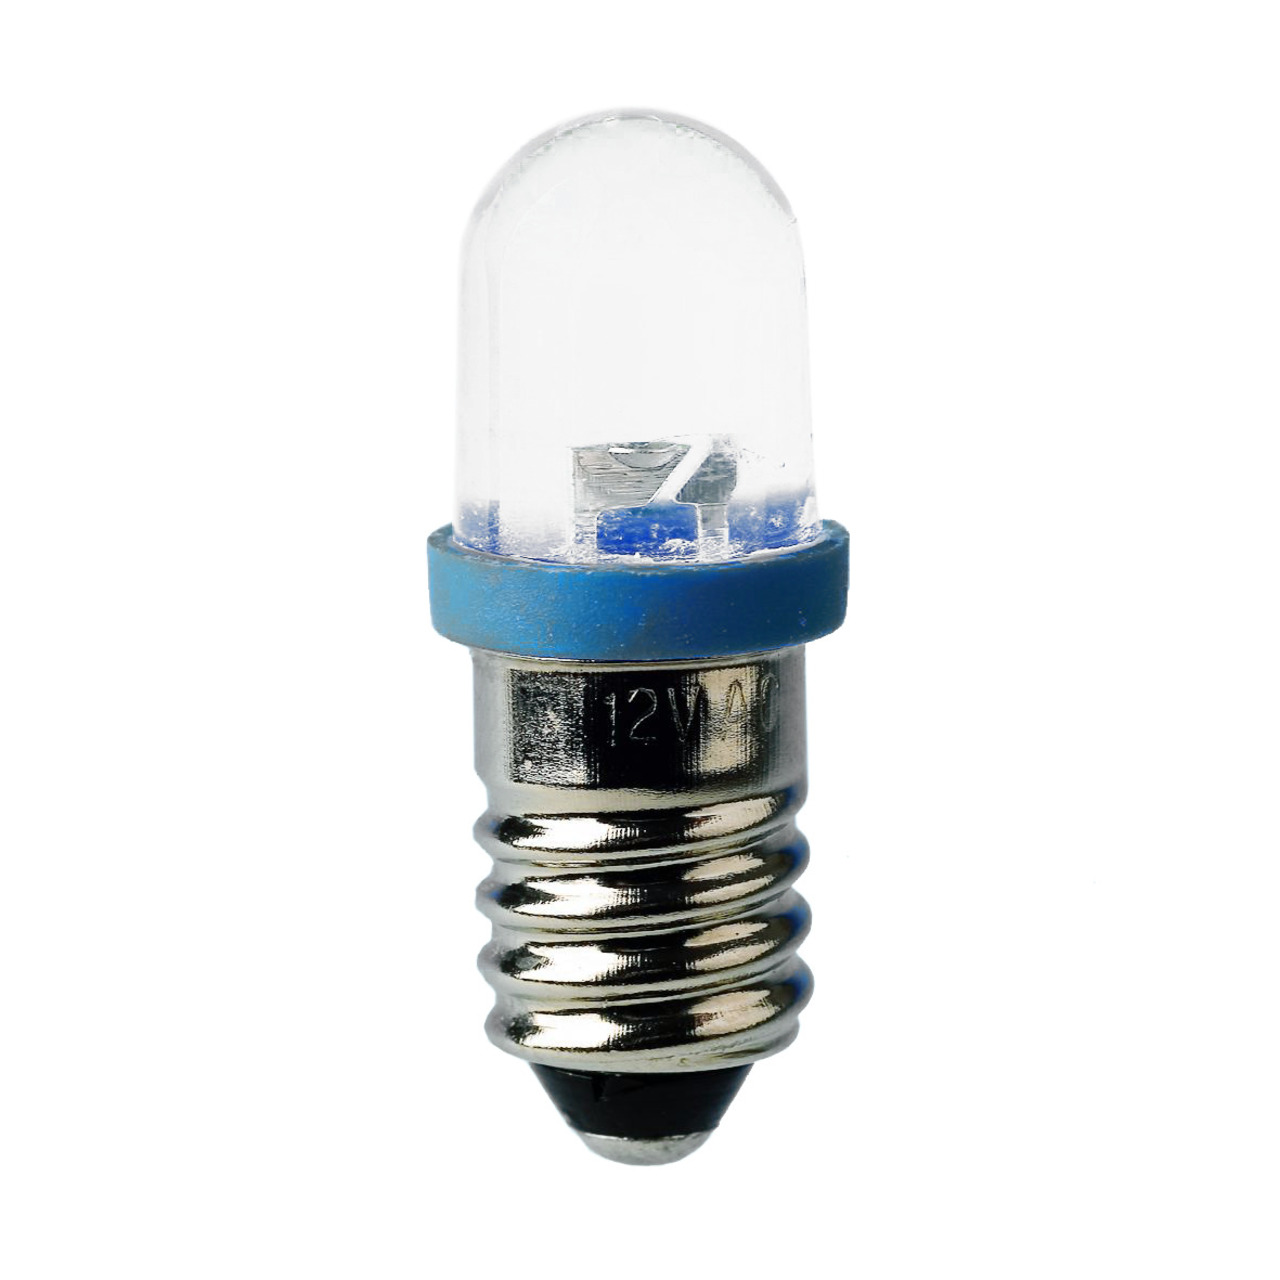 Barthelme LED-Lampe E10 mit Brckengleichrichter- 10 x 28 mm- 230 V- blau